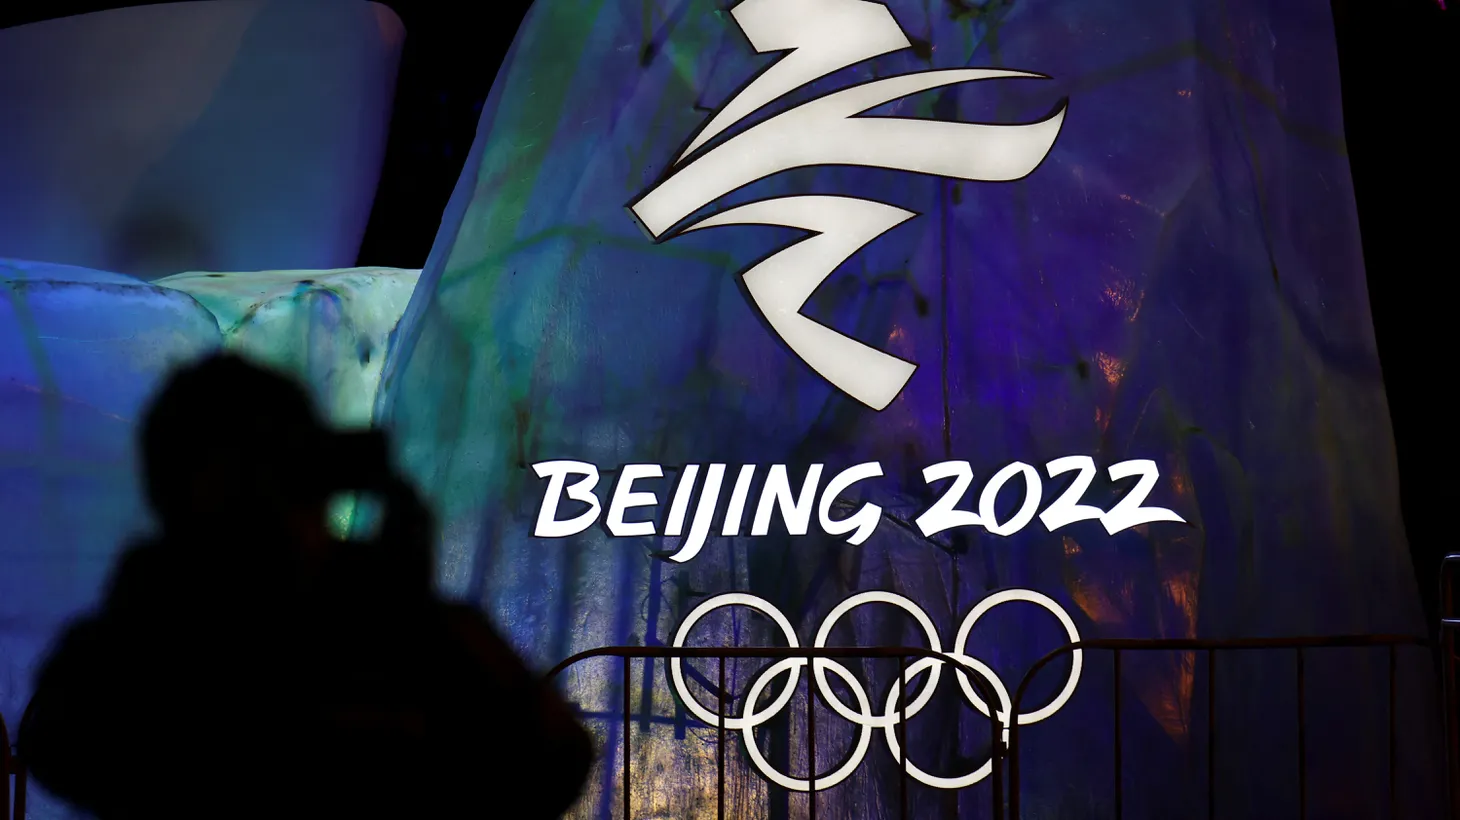 A man photographs an illuminated logo ahead of the 2022 Winter Olympics in Beijing, China, January 26, 2022.